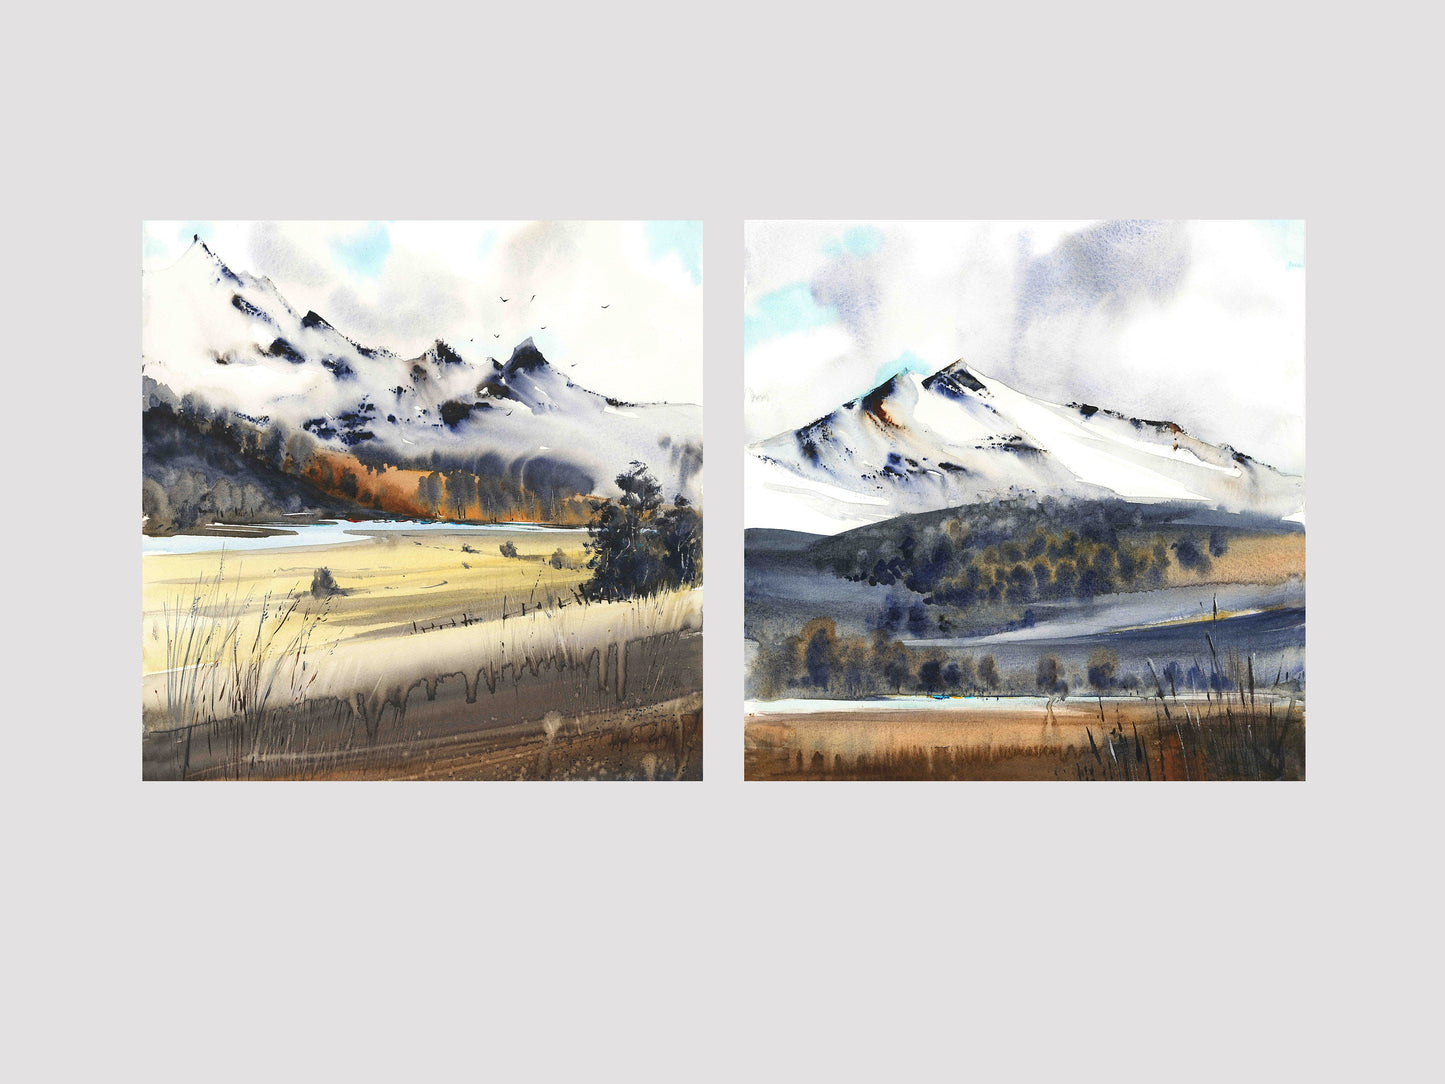 Set Of 2 Nature Square Prints, Autumn Landscape Wall Art, Mountain Lake Painting on Canvas, Burnt Orange, Gray, Giclee Print, Home Decor